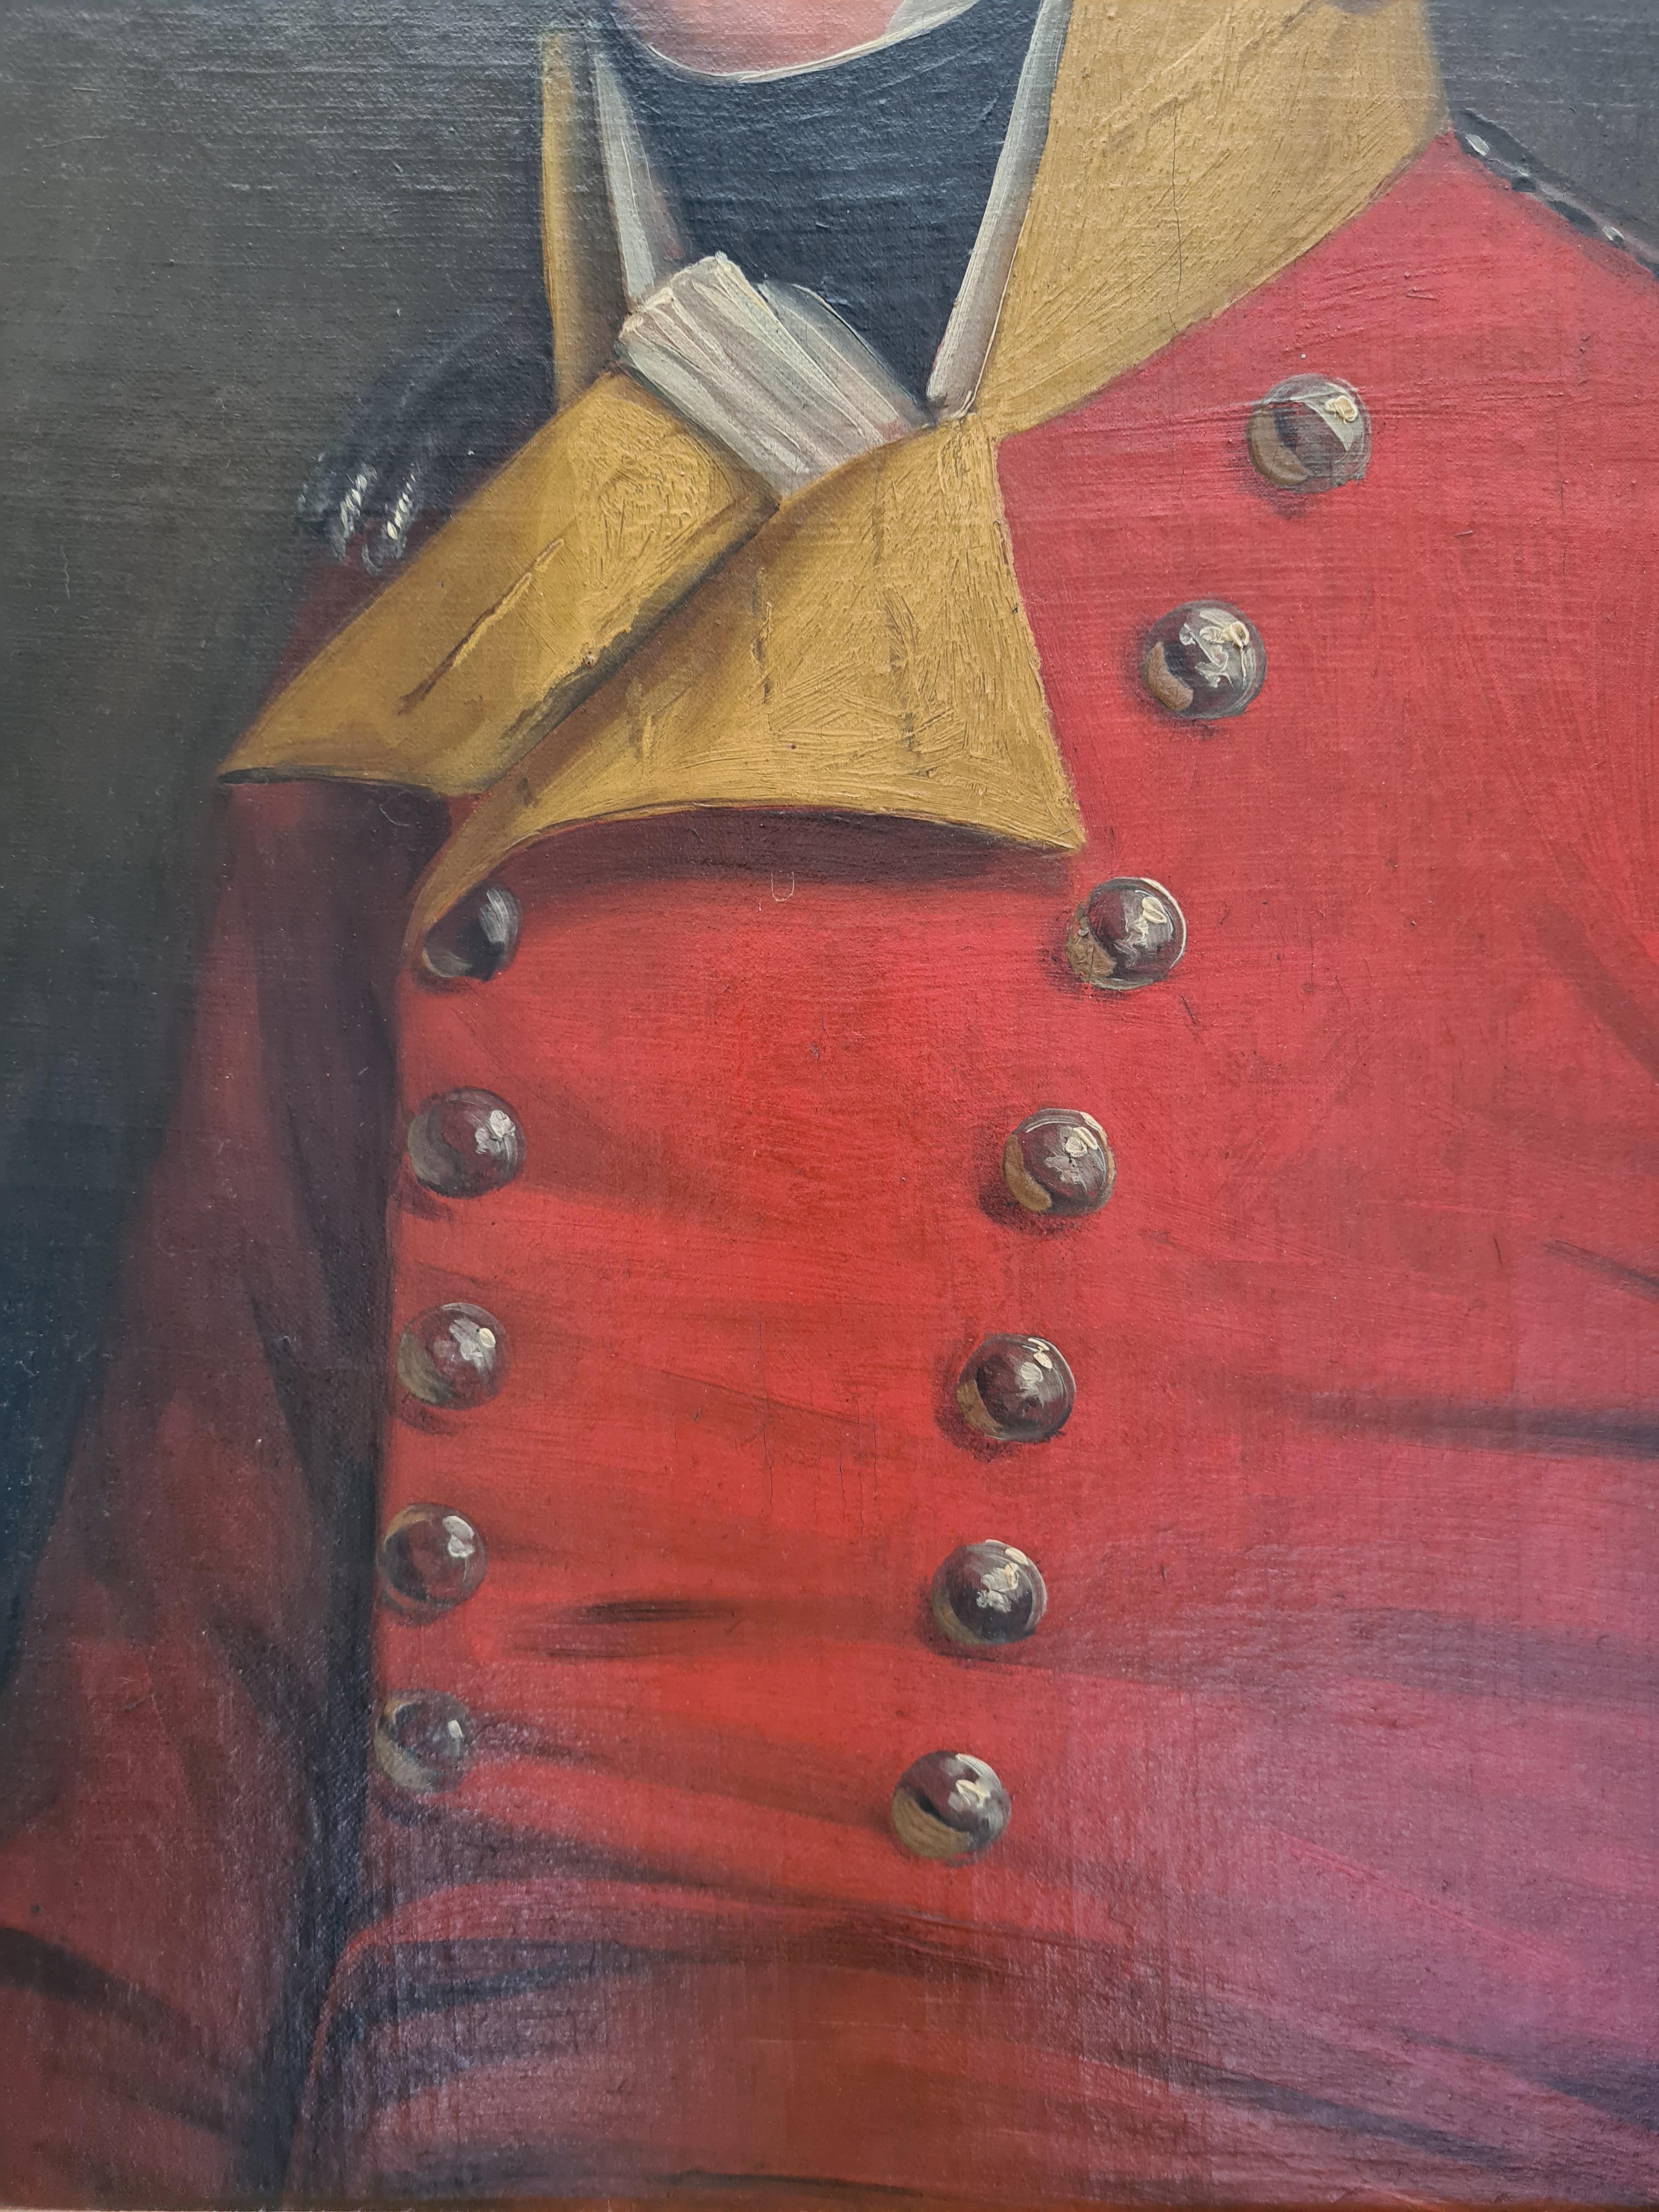 18th century military uniforms